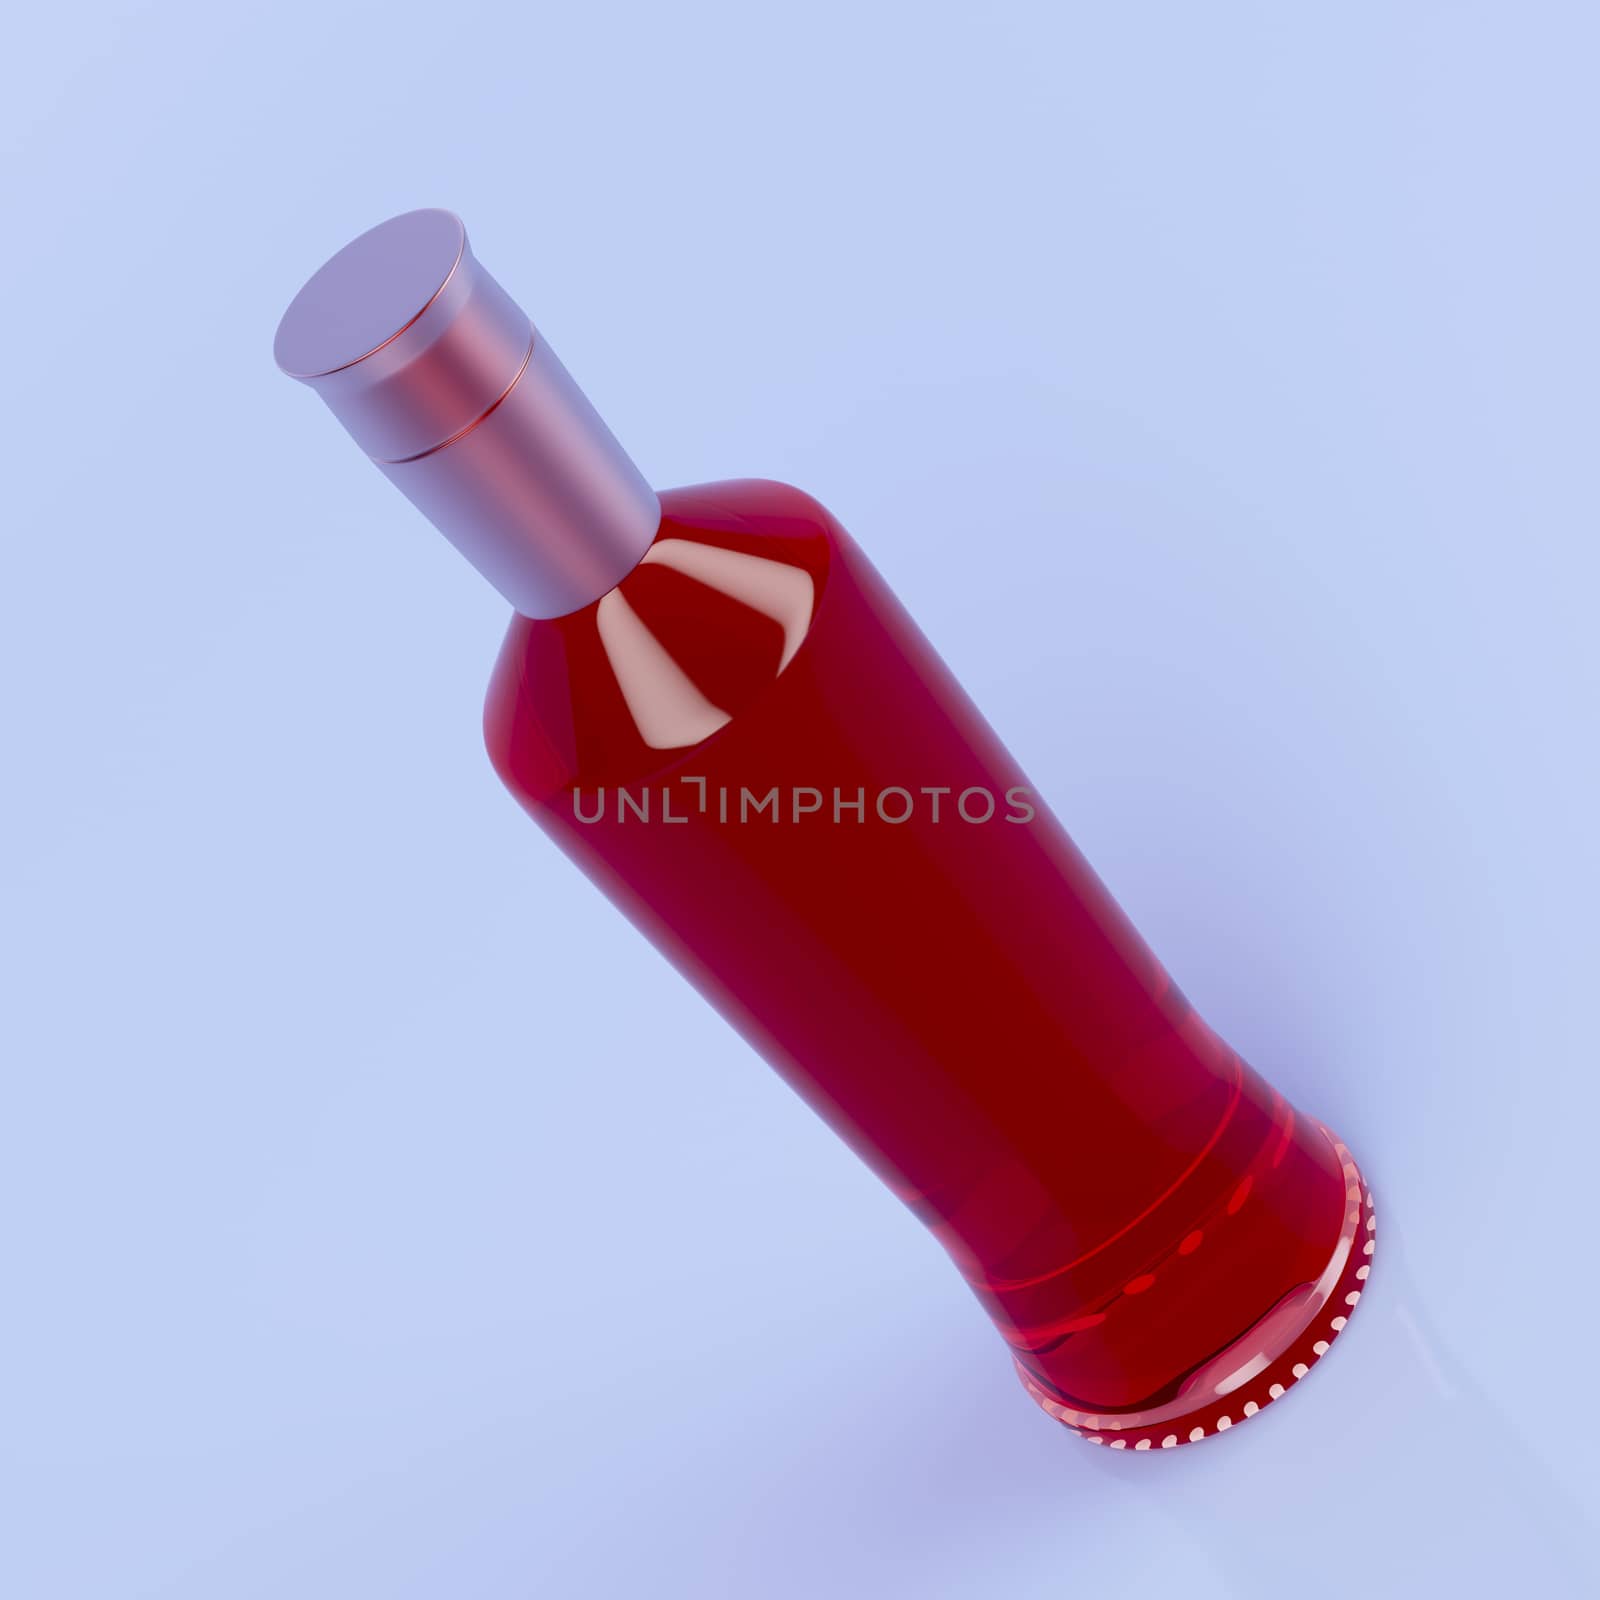 Red liqueur bottle on shiny blue background